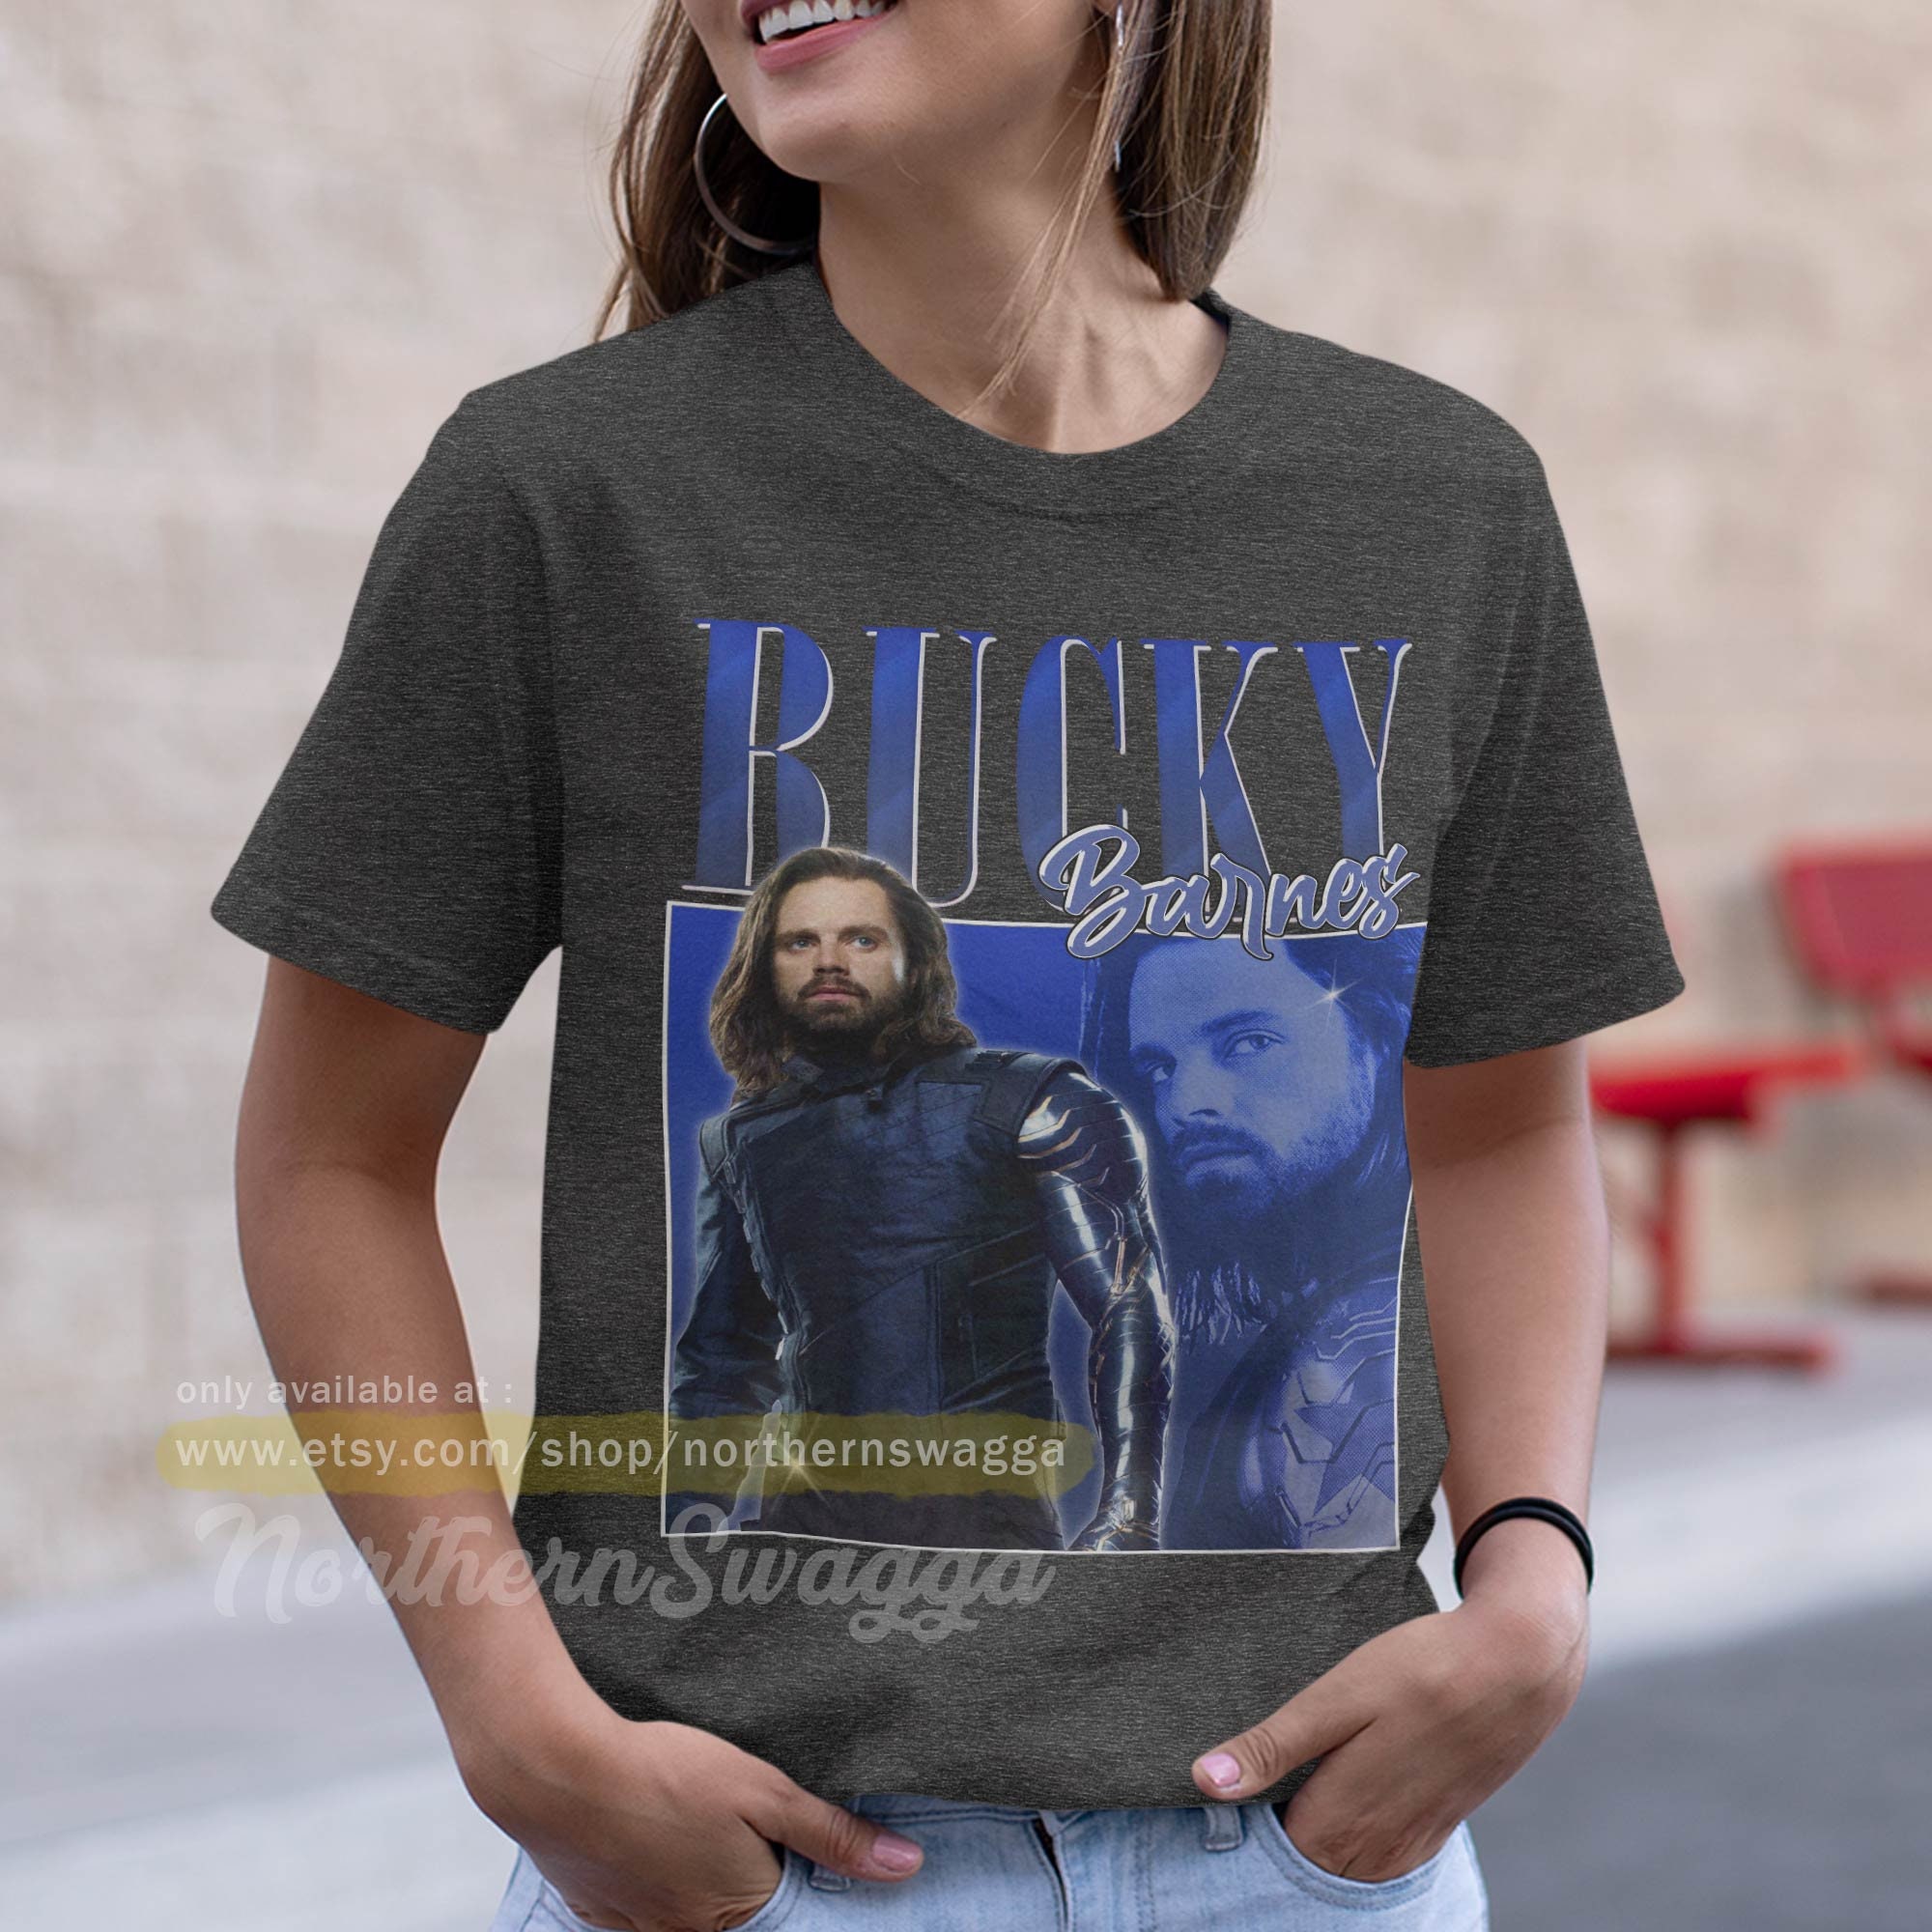 Discover Bucky barnes shirt design retro style cool fan art T-Shirt